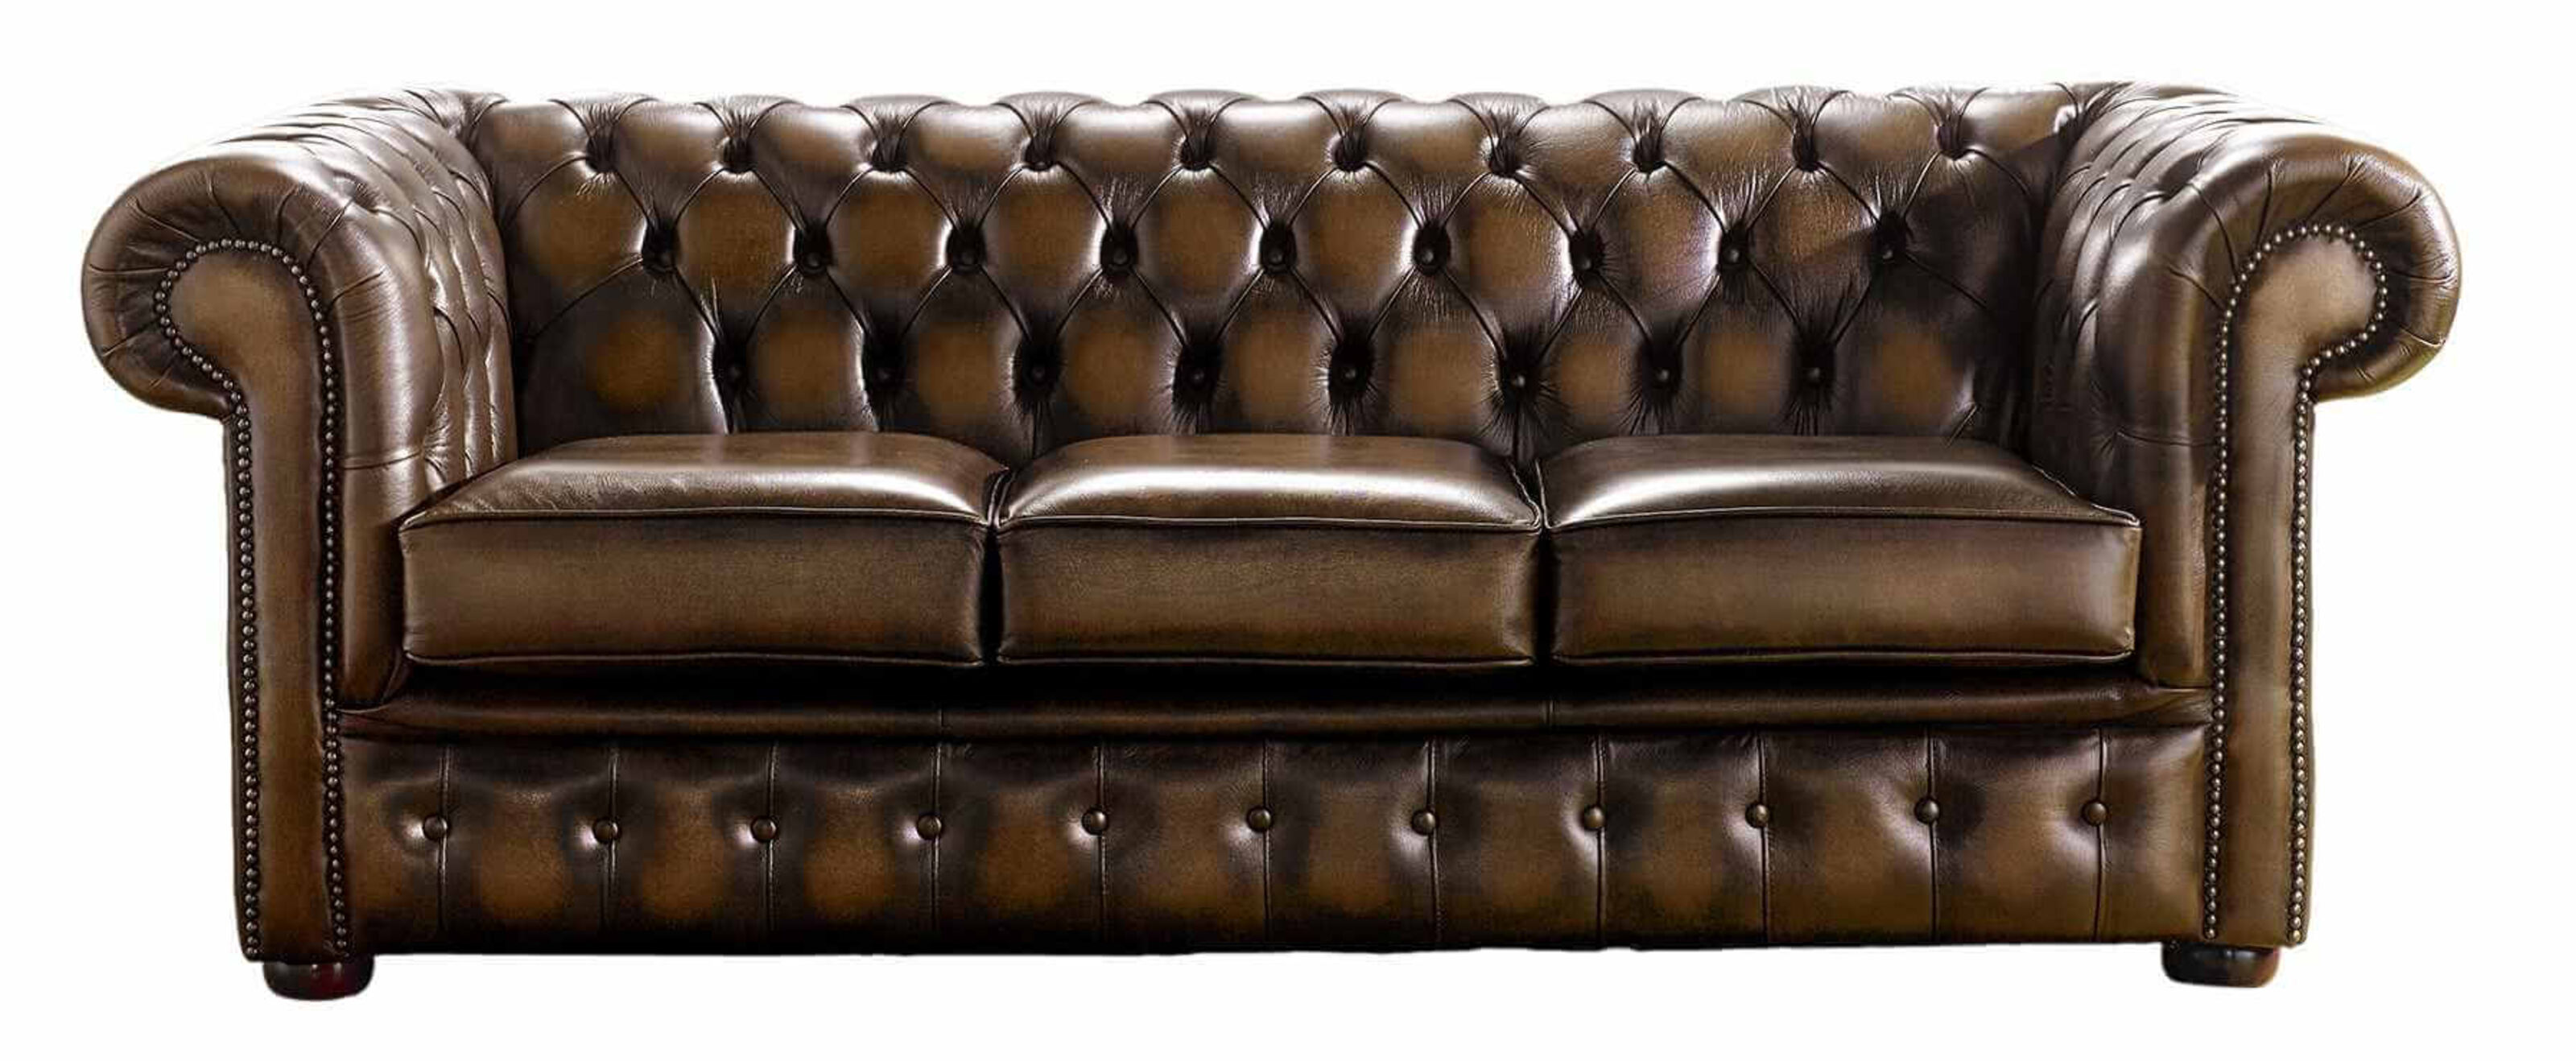 Blackburn's Elegant Seating: Explore Chesterfield Sofas  %Post Title